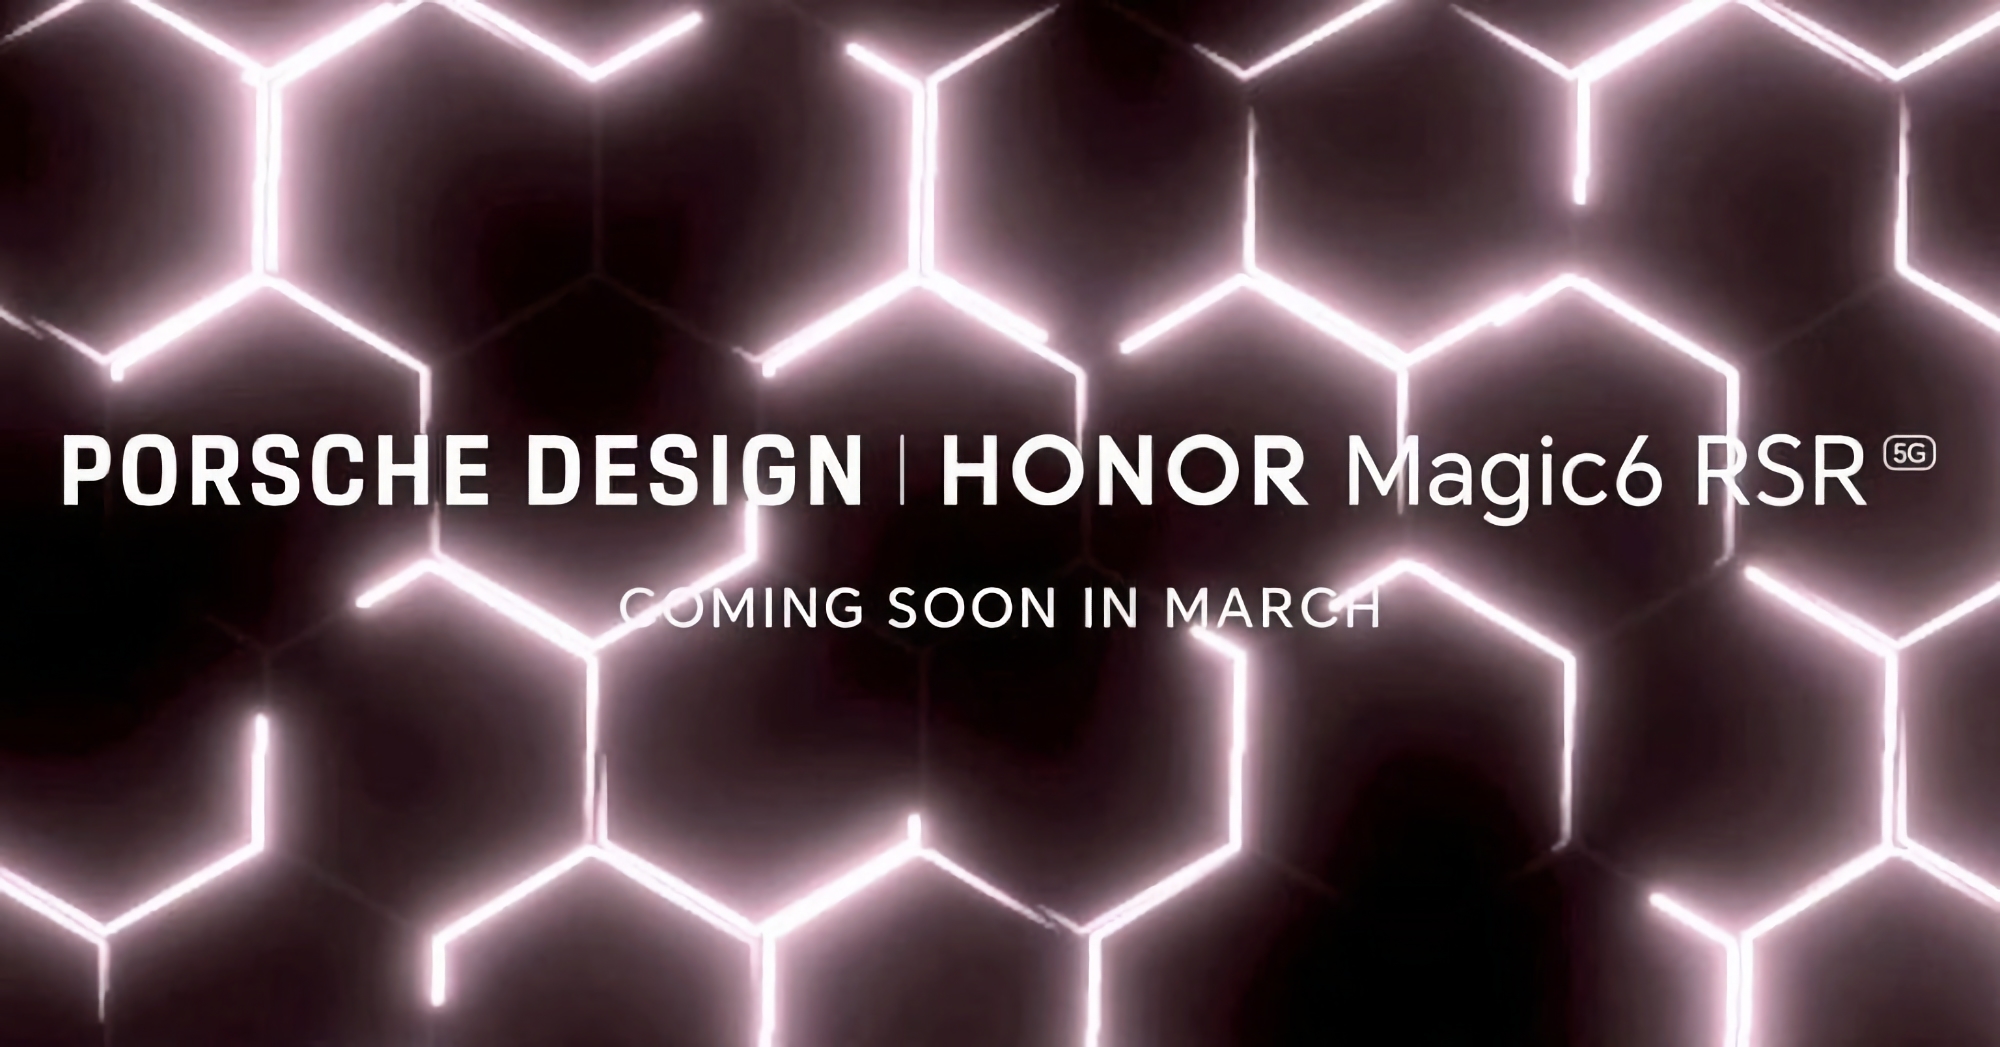 Honor presentará el Magic 6 RSR Porsche Design en marzo